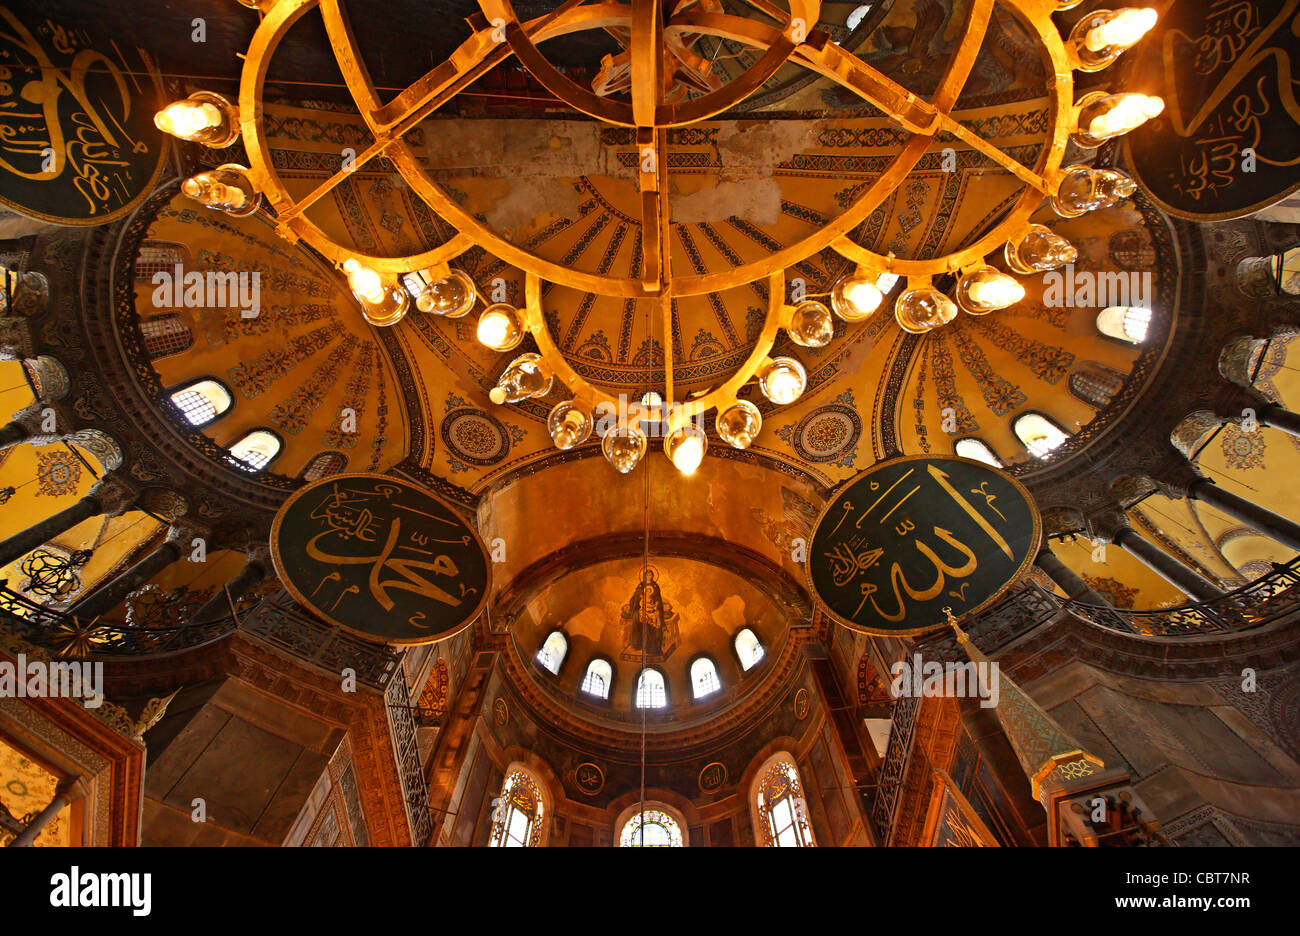 Inside view of Hagia Sofia, with beautiful Christian fresco, Islamic inscriptions, and impressive chandelier. Istanbul, Turkey Stock Photo